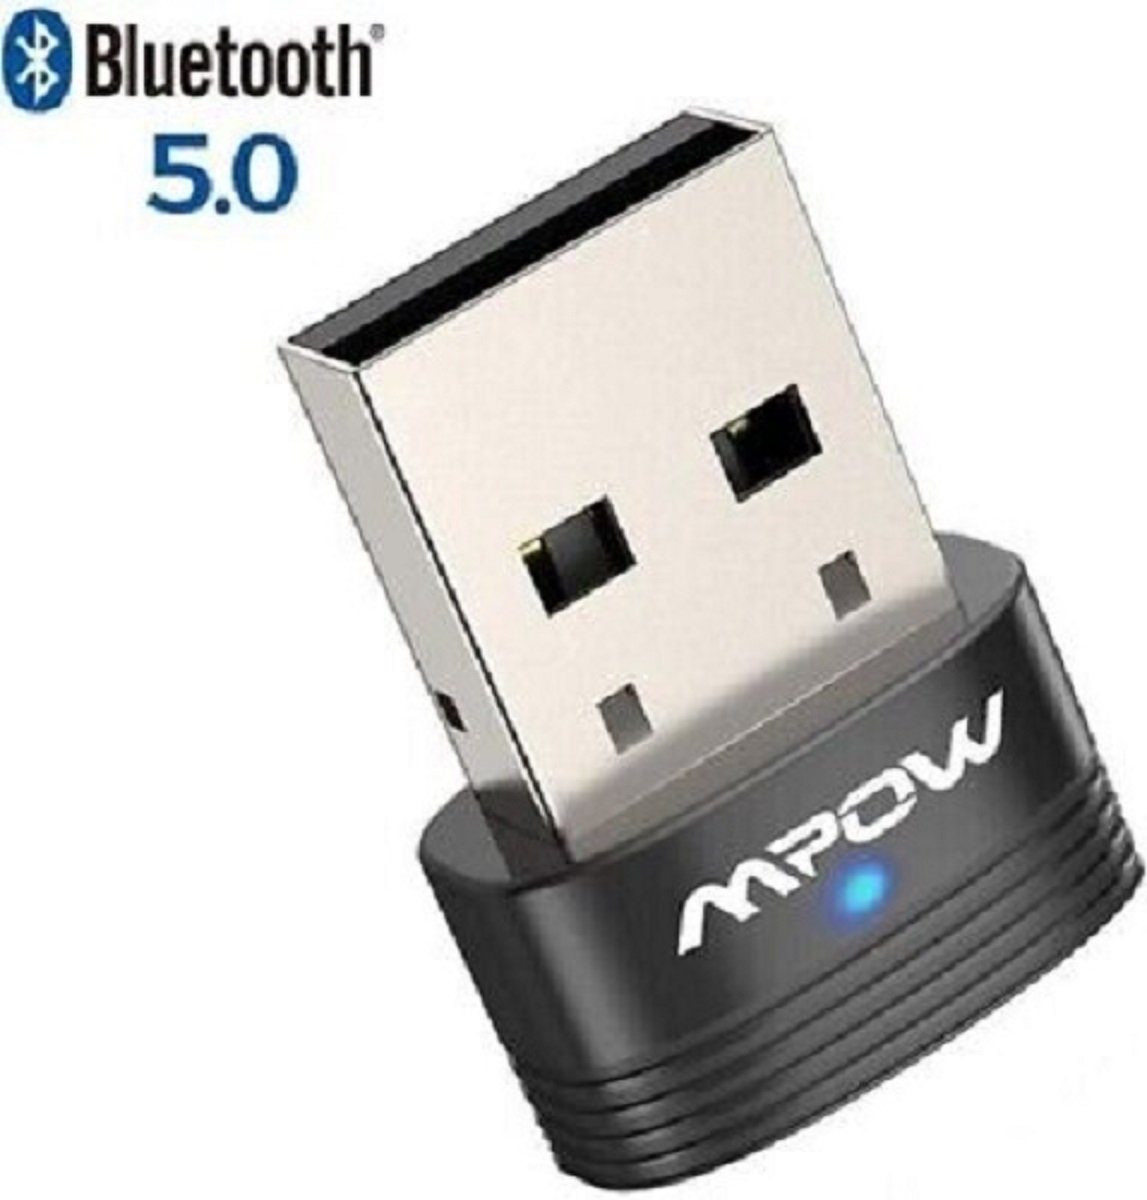 Mpow Bluetooth®-Sender Bluetooth Sender Empfänger USB 5.0 Dongle